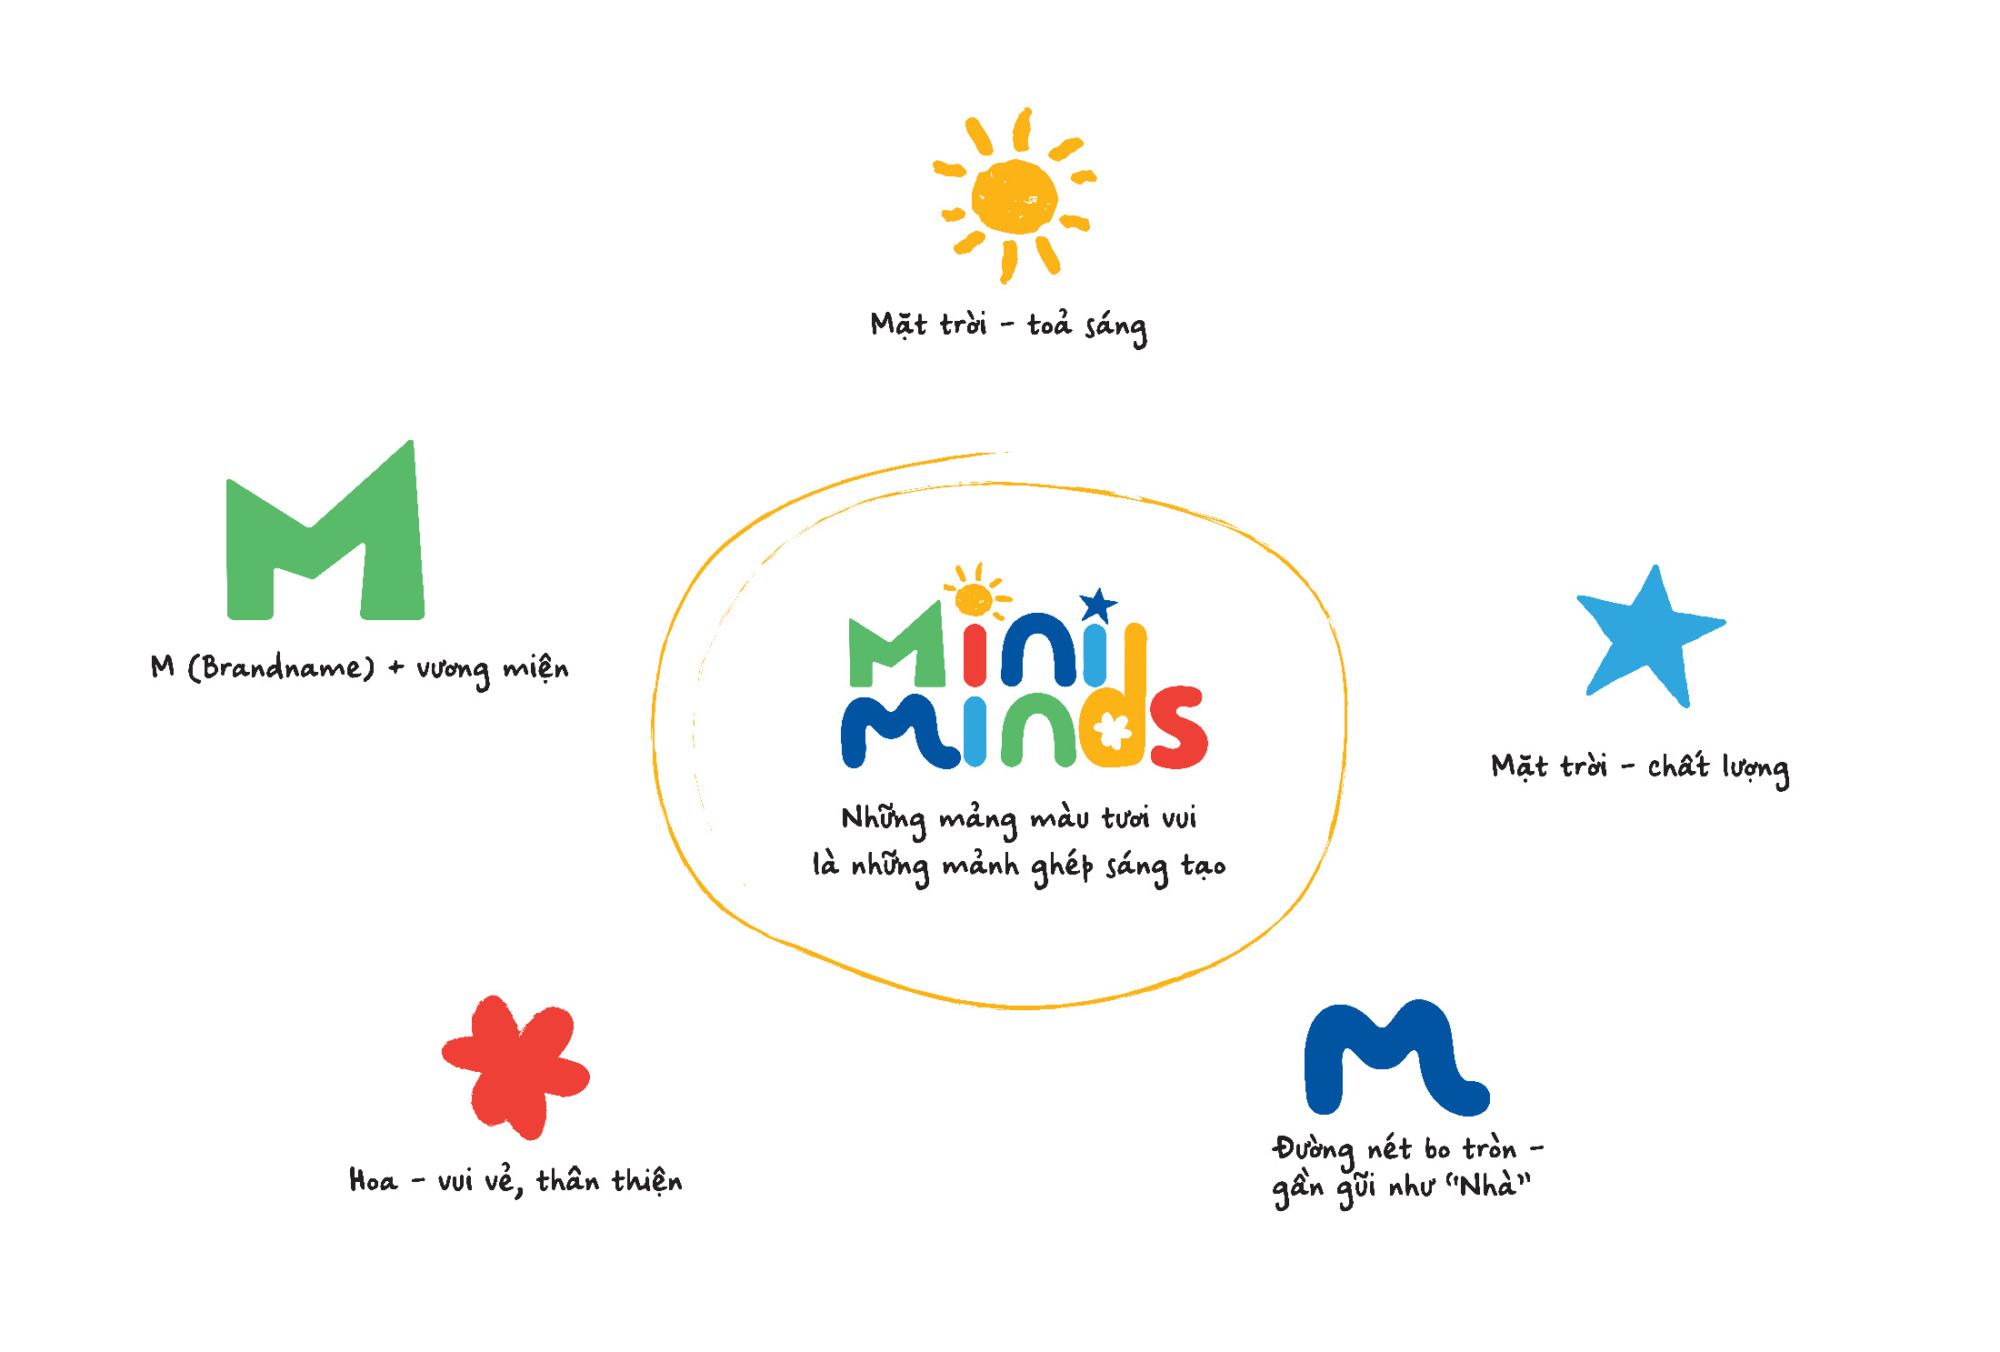 Mini Minds